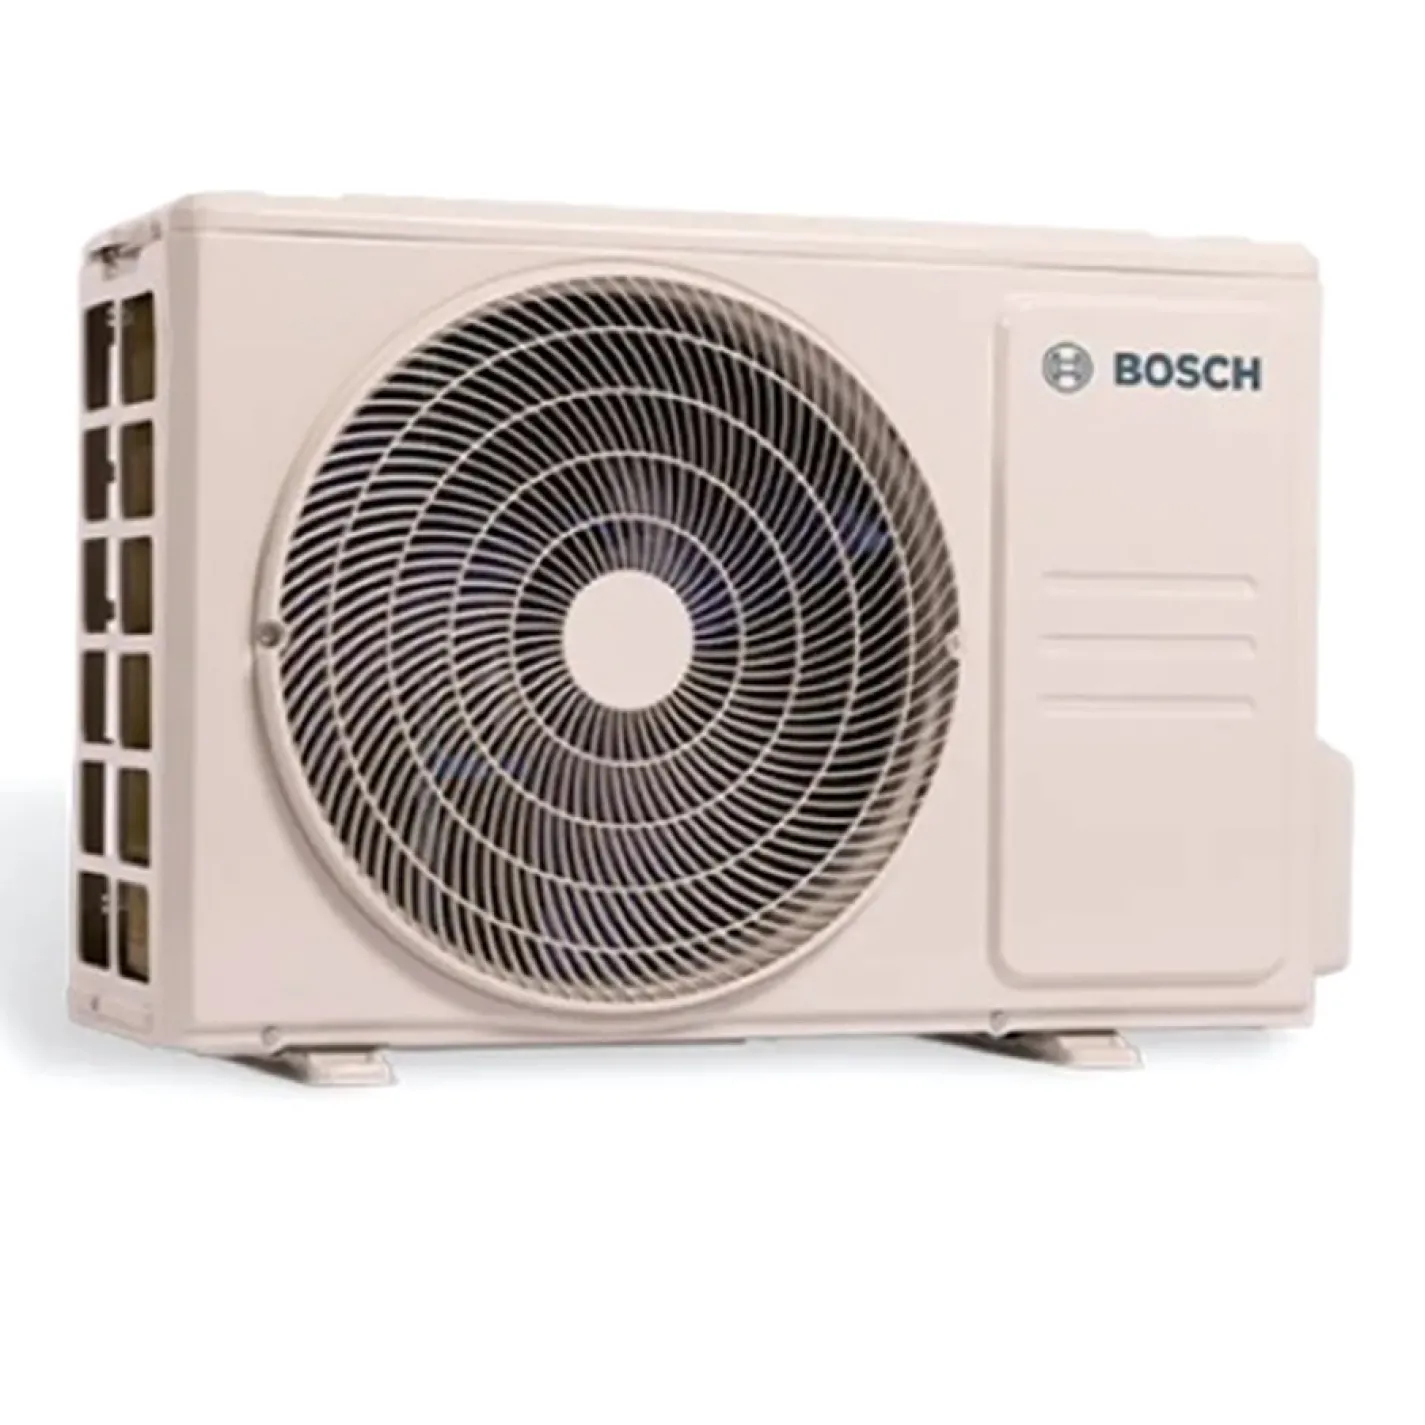 Кассетный кондиционер Bosch Climate CL5000iL 2x70 4CE-3  - Фото 2